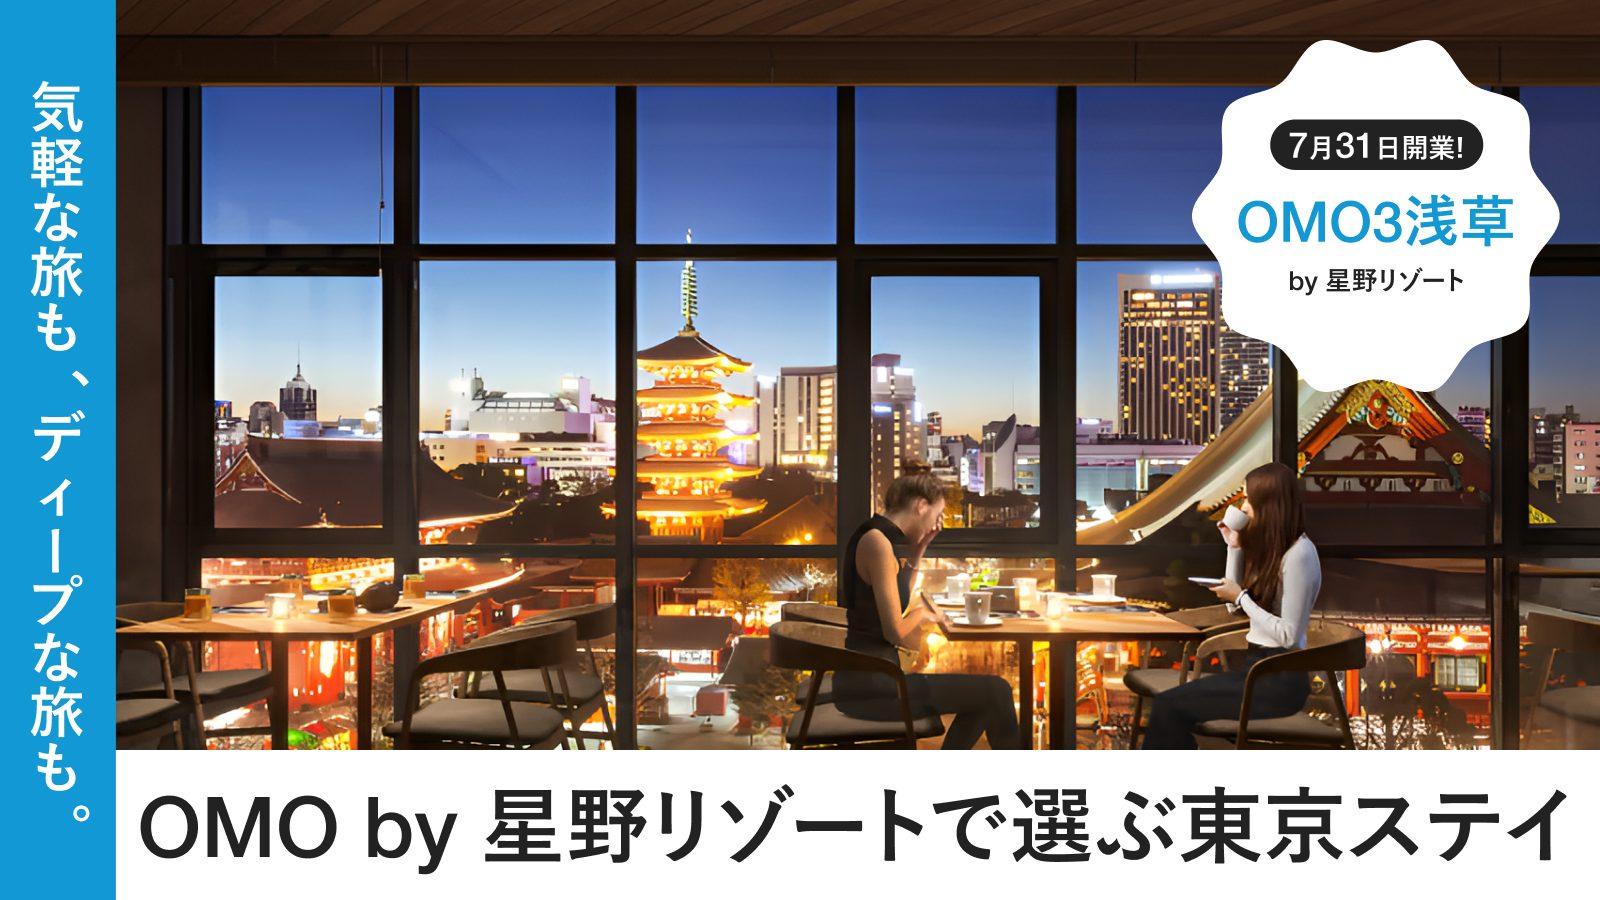 OMO3浅草 by 星野リゾートは7月31日開業！ 気軽な旅も、ディープな旅も。OMOで選ぶ東京ステイ